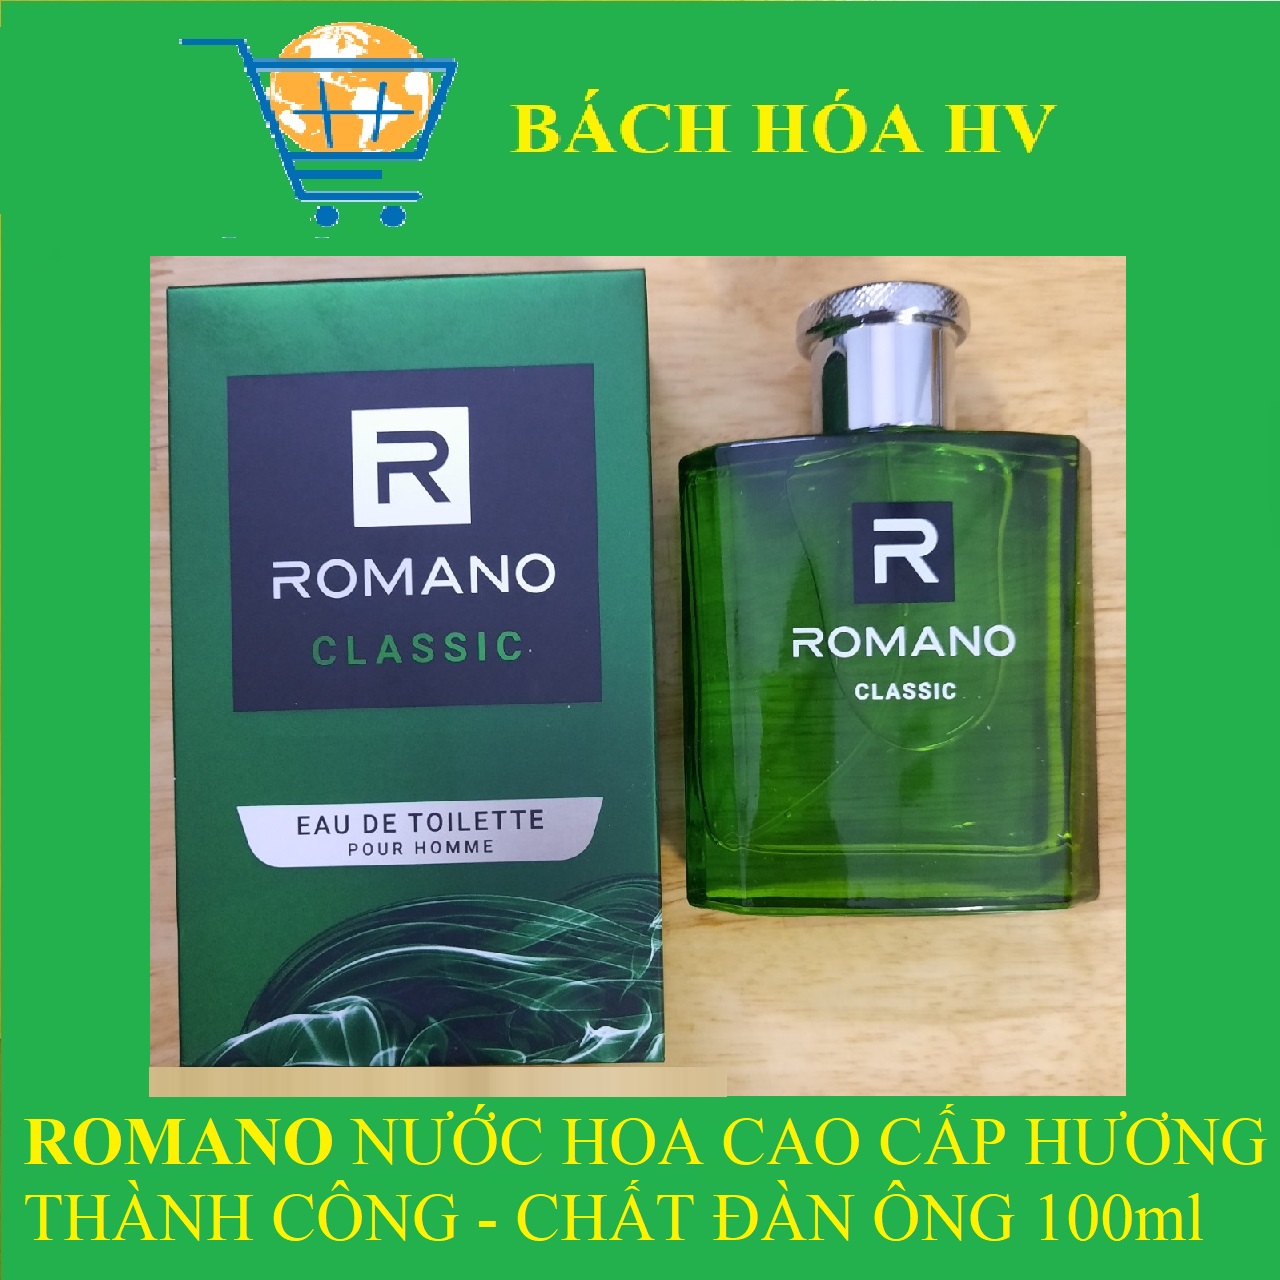 Nước Hoa ROMANO CLASSIC 100 ml - BACH HOA HV